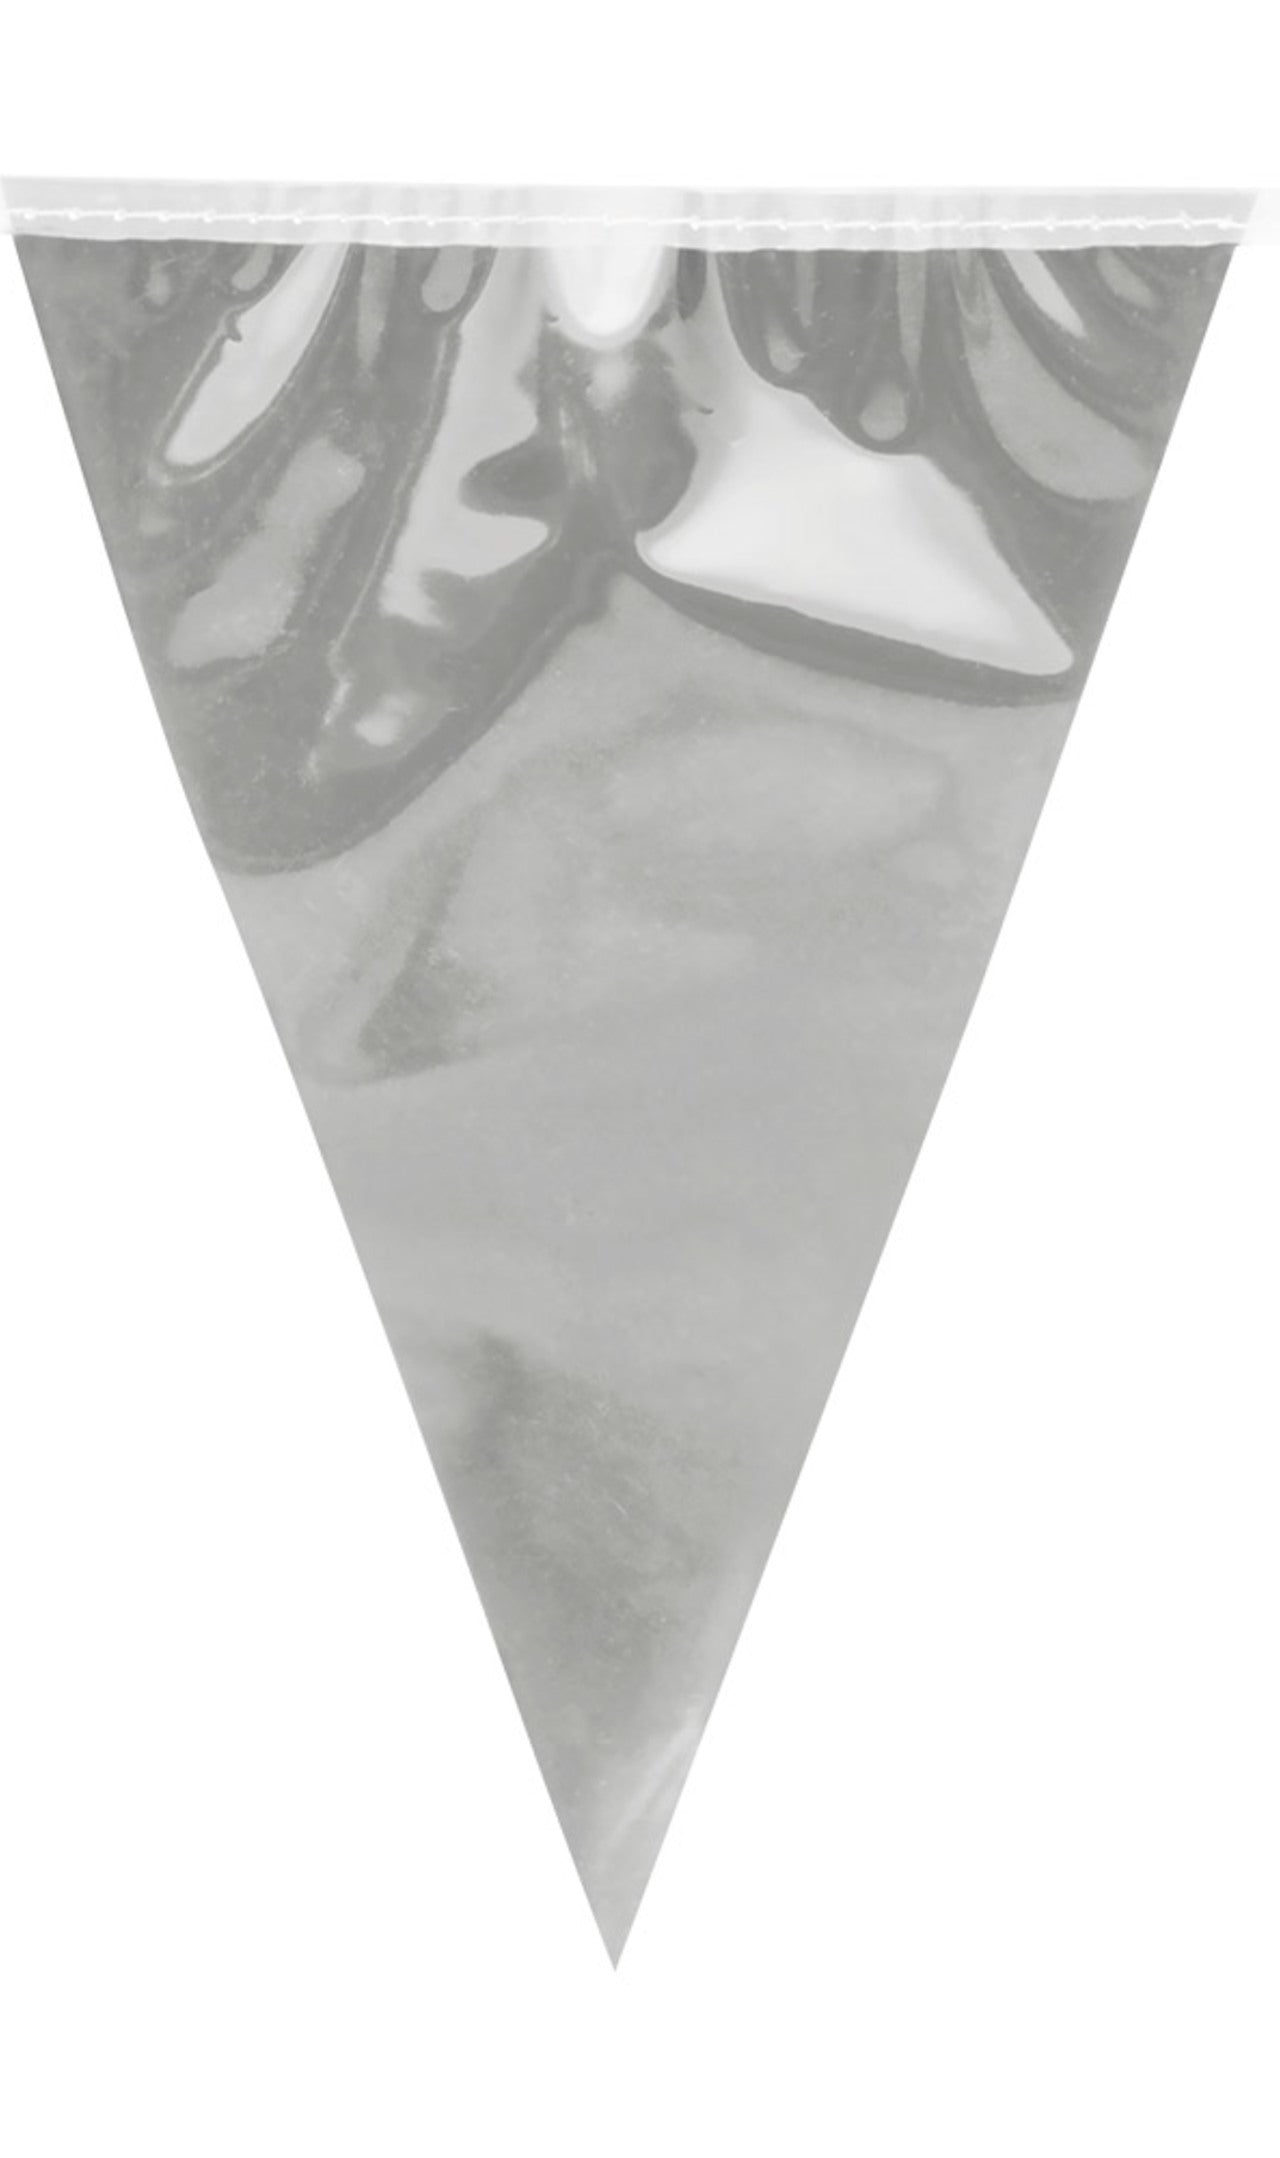 Guirlanda Bandeiras Triangulares Prata